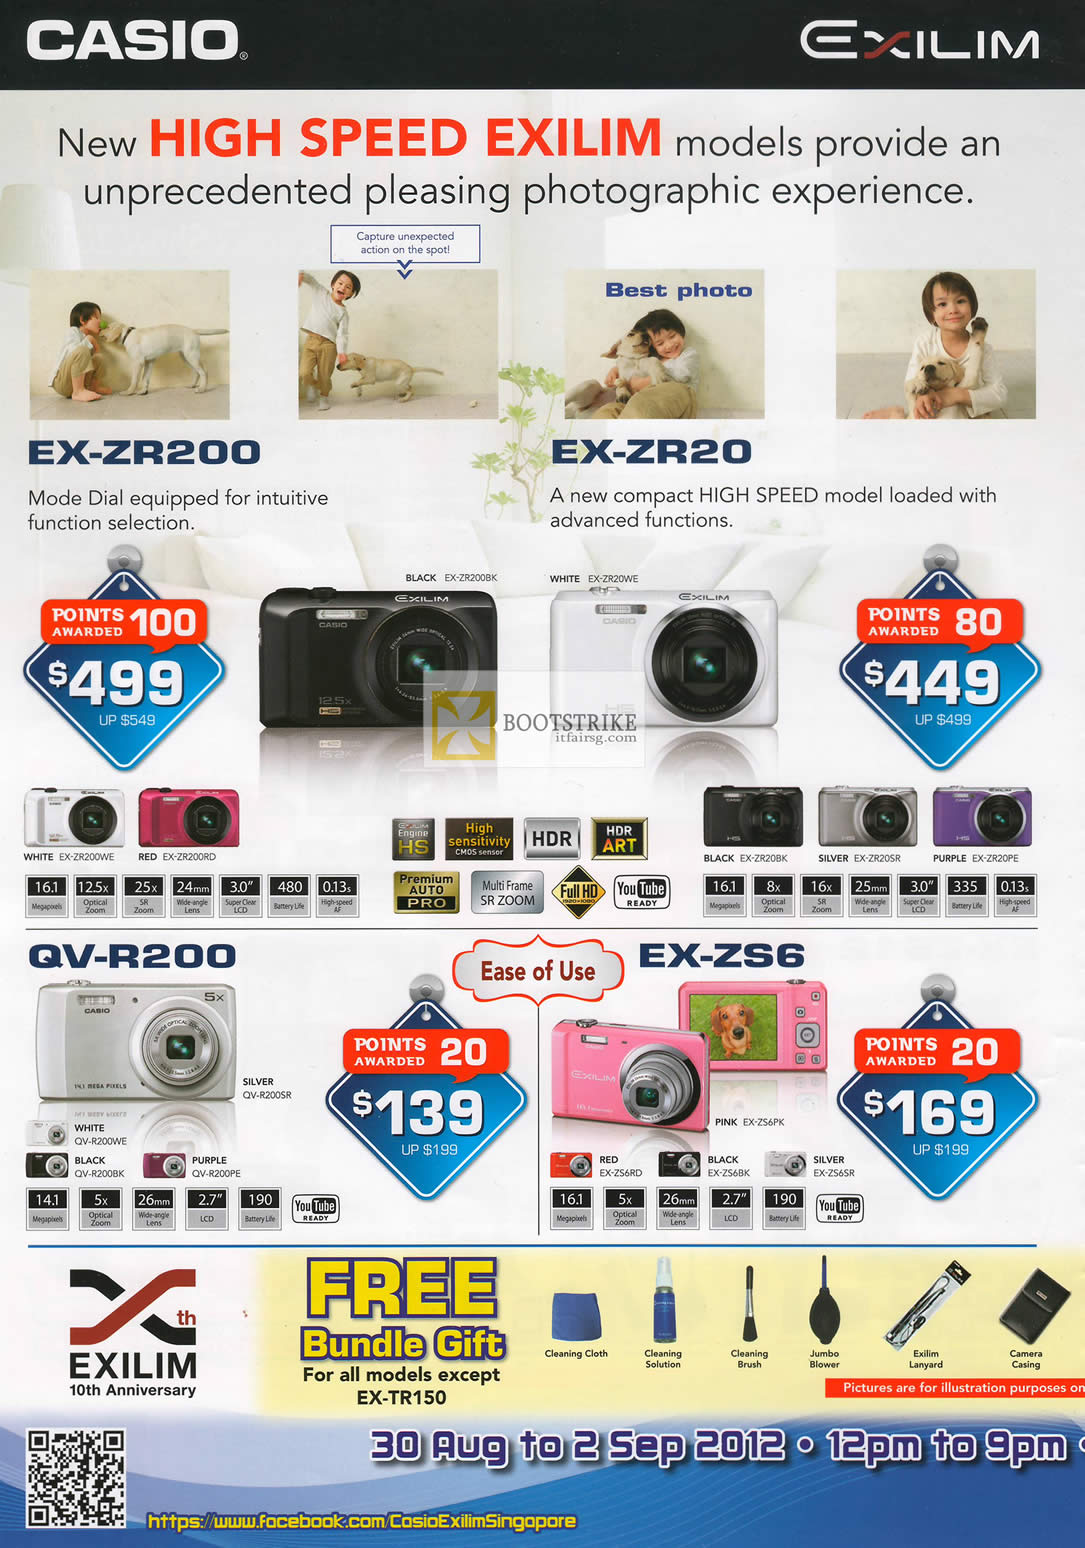 Casio Digital Cameras Exilim Ex Zr200 Ex Zr20 Qv R200 Ex Zs6 Comex 2012 Price List Brochure Flyer Image